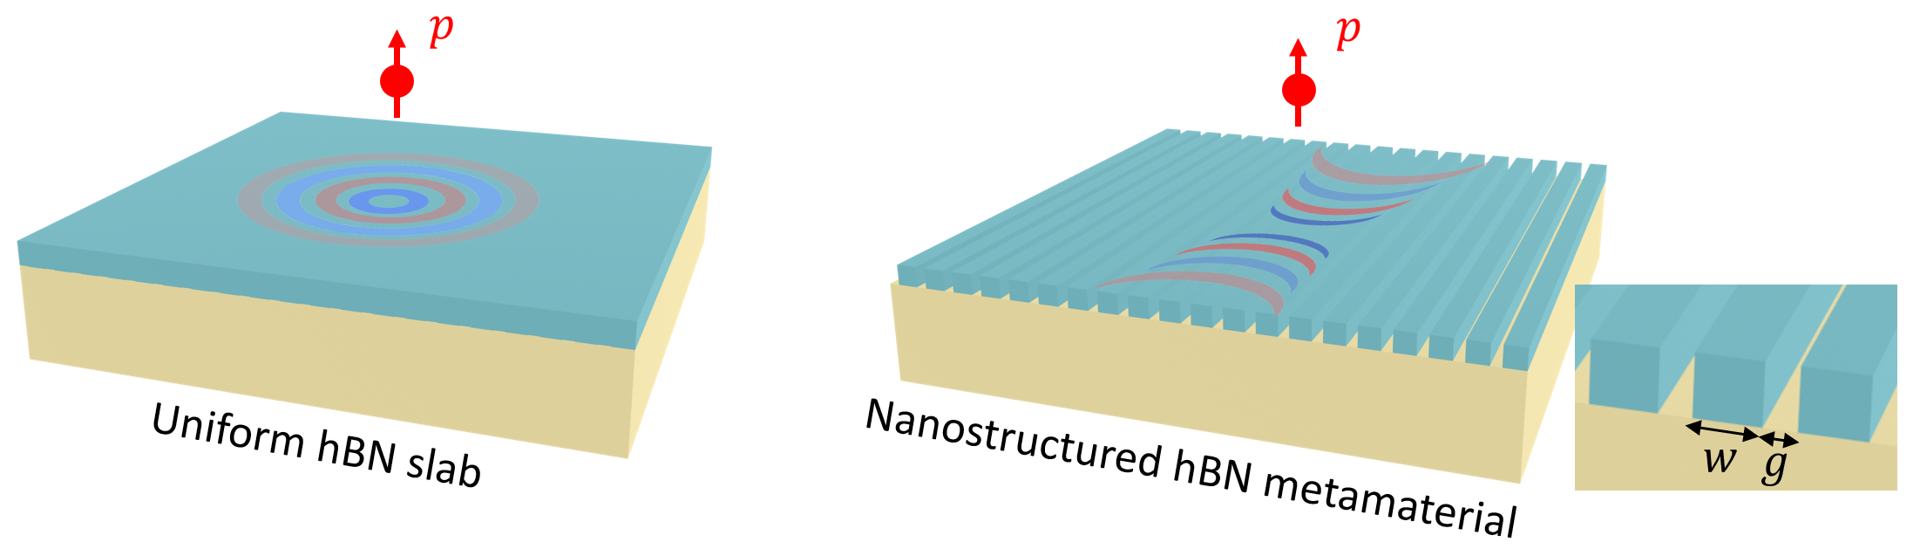 Hyperbolic polaritons in nanostructured hBN